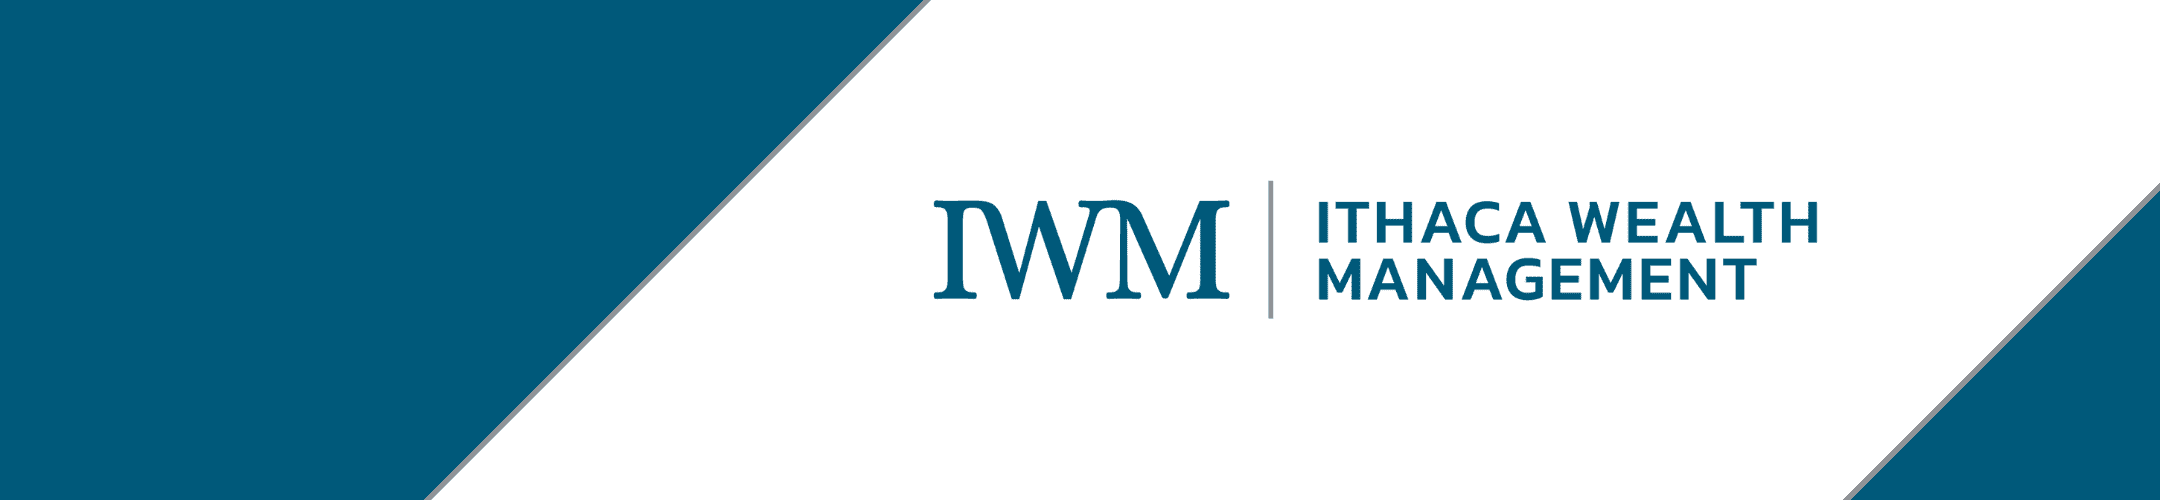 Elegant corporate banner for ithaca wealth management, showcasing the company's acronym iwm in a crisp, serif font on a sleek blue split-background design.